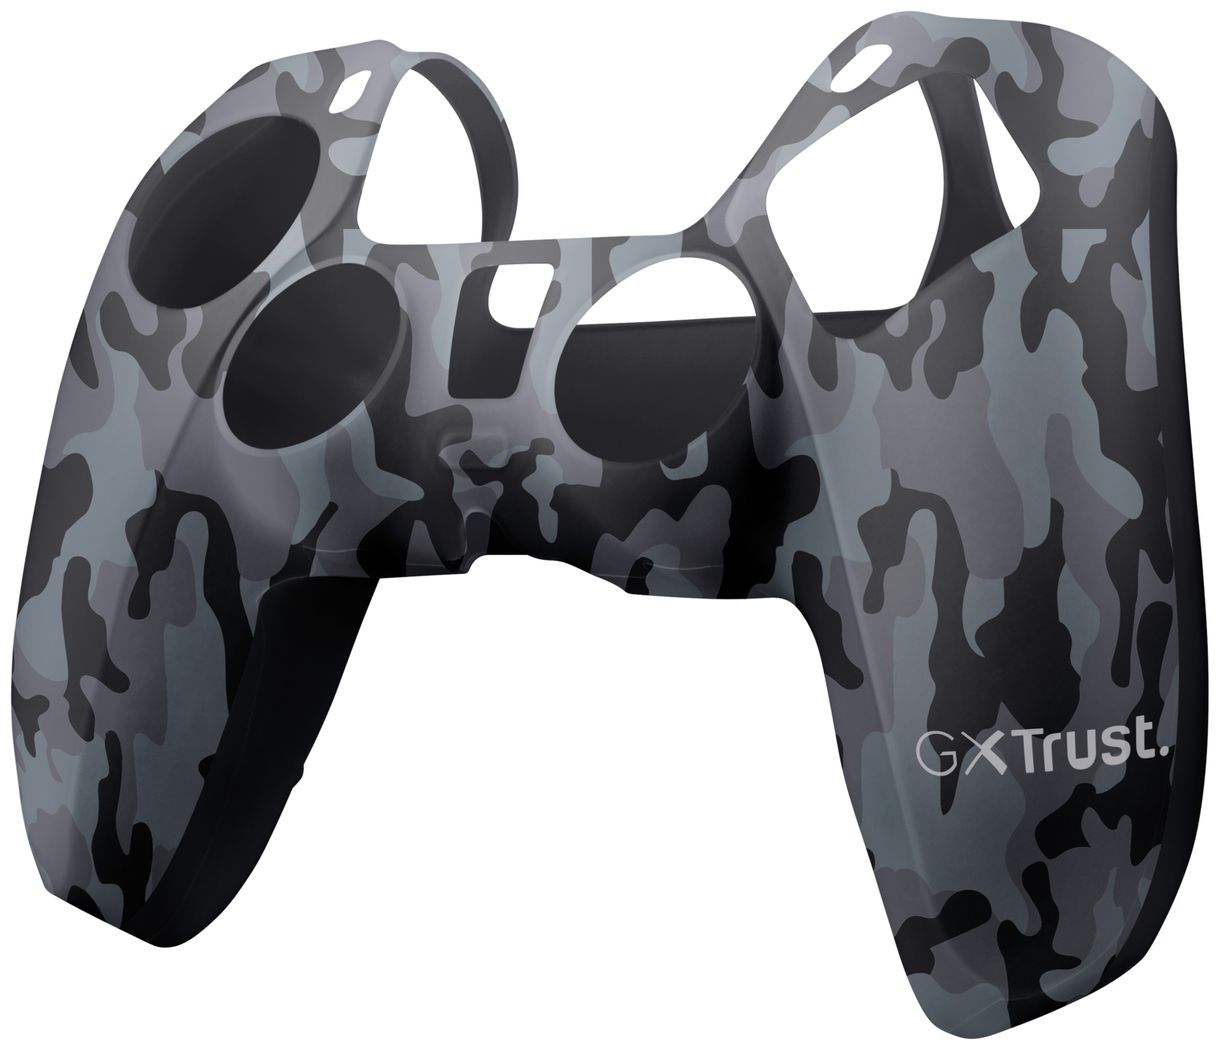 GXT748 Controller Skin Gaming-Controllergehäuse PlayStation 5 (Schwarz, Grau) 